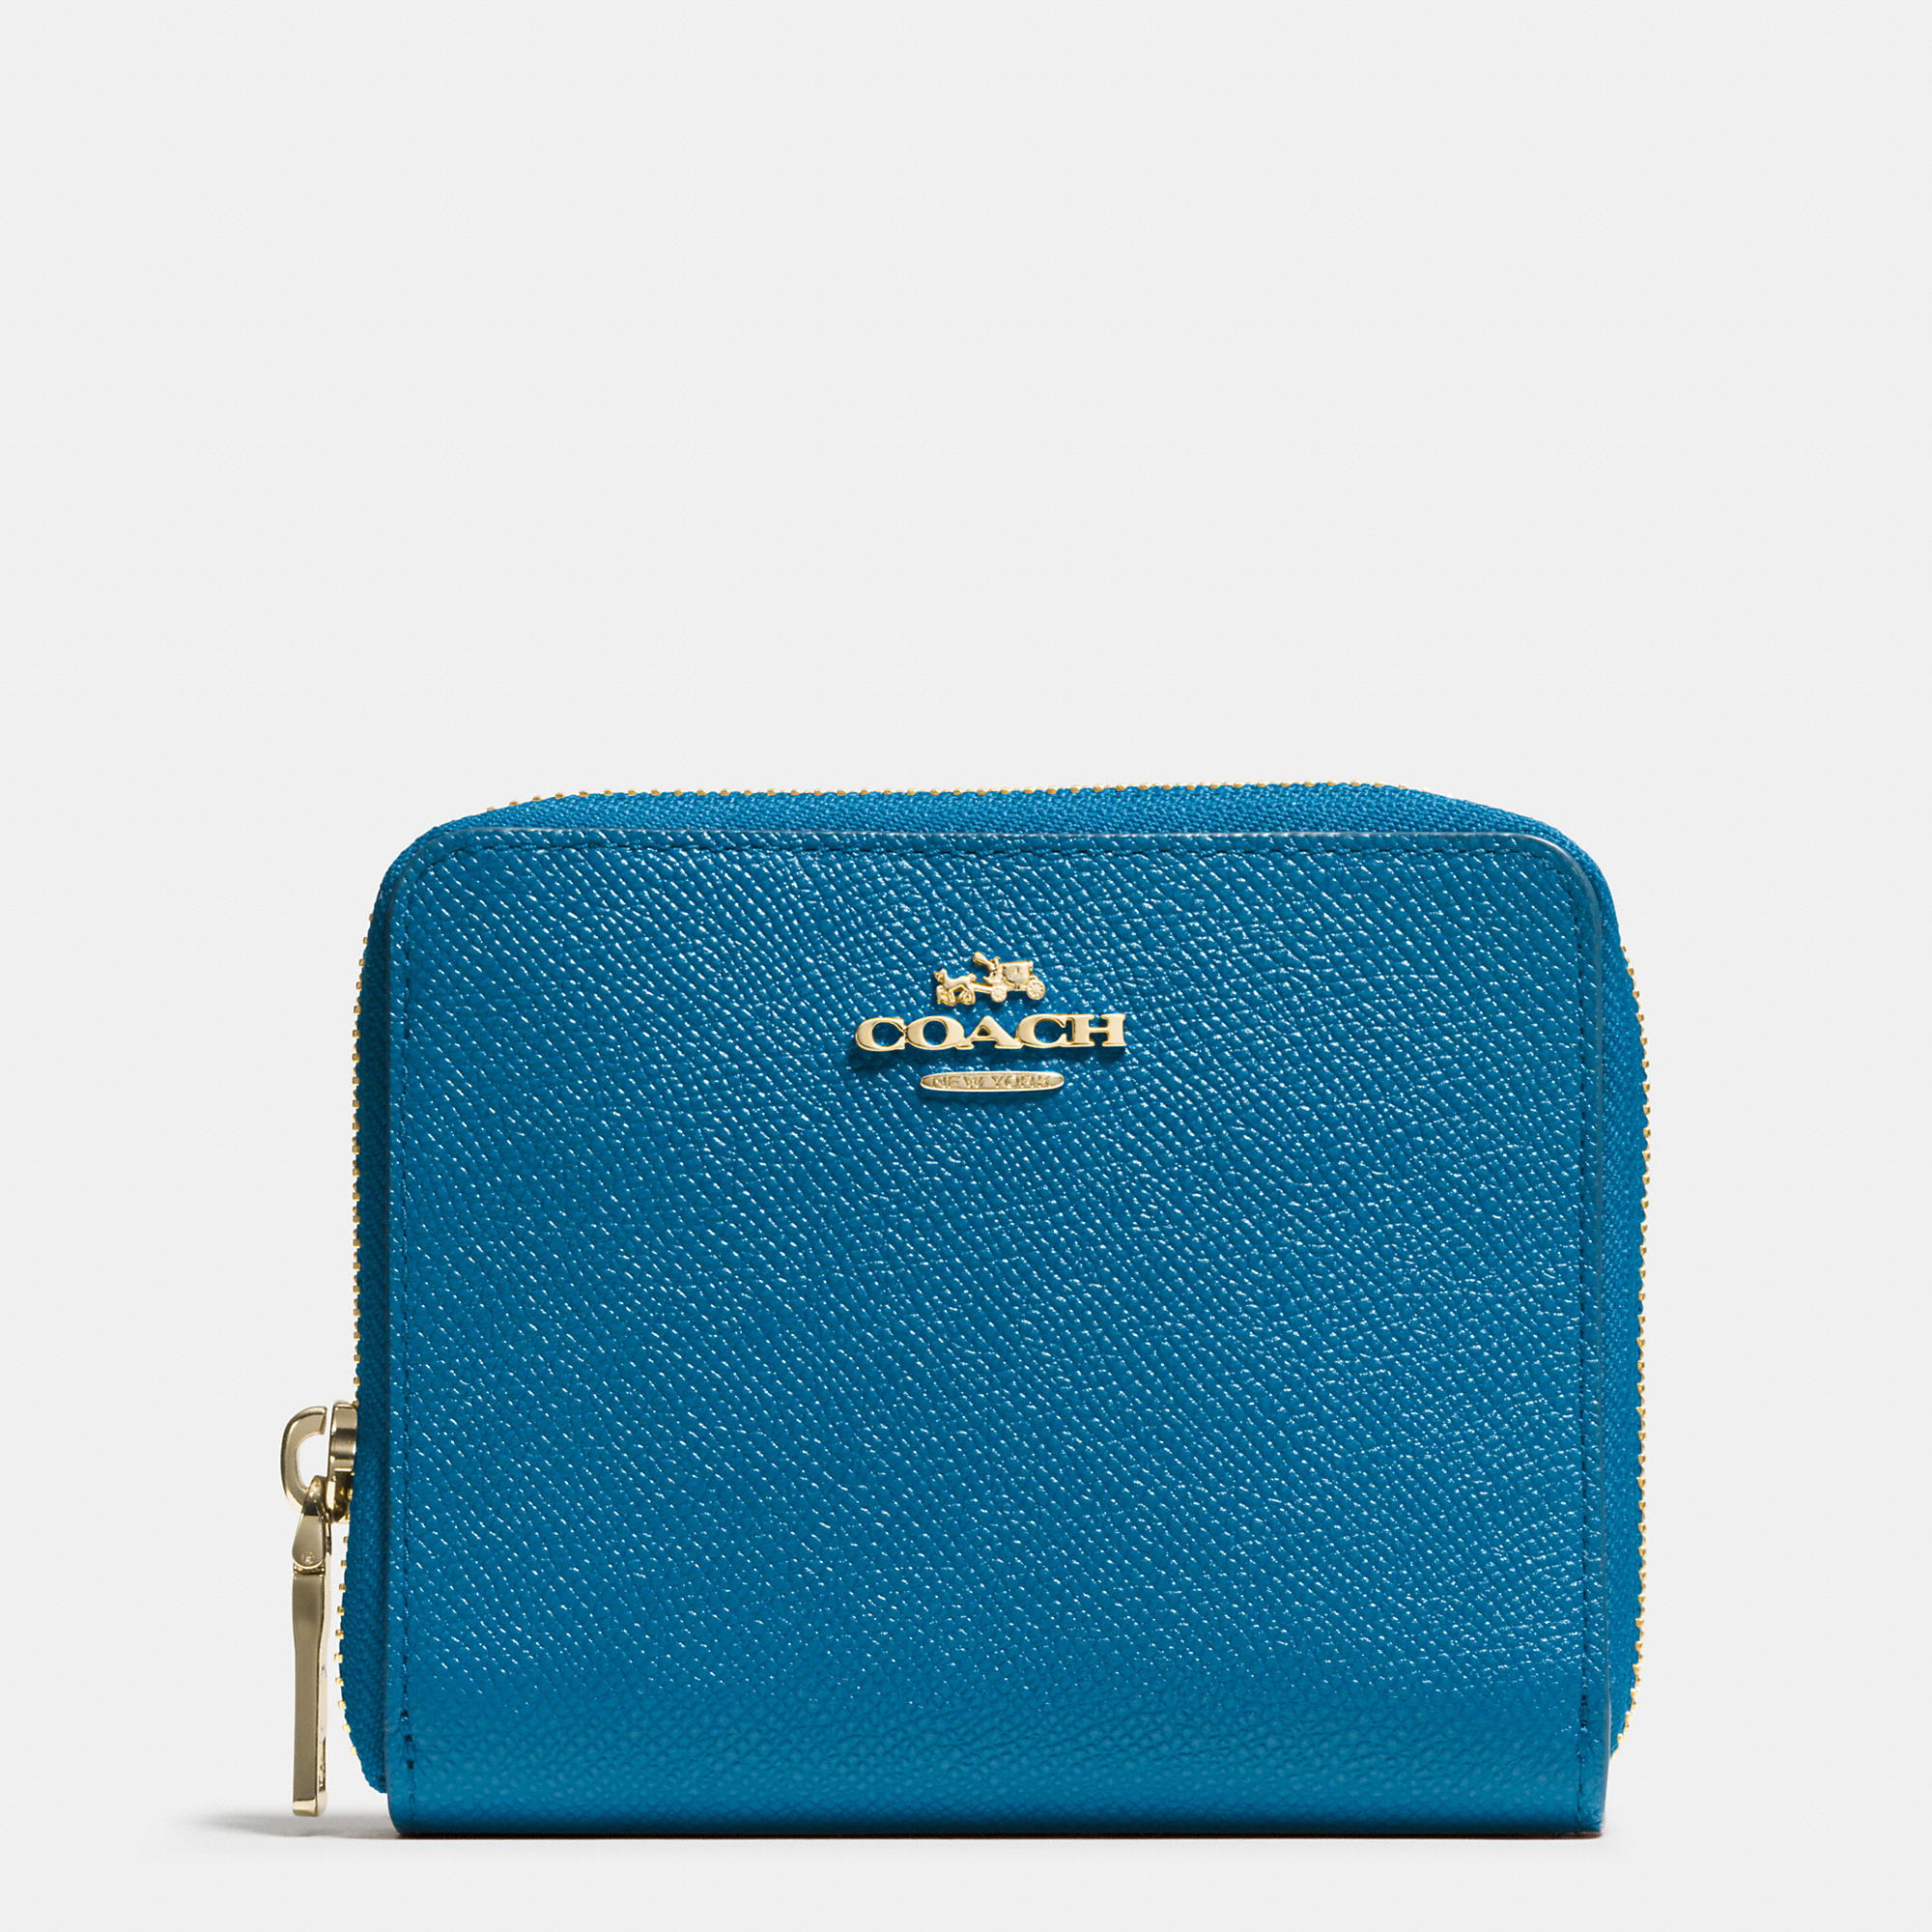 Lyst - Coach Medium Continental Wallet In Crossgrain Leather in Blue